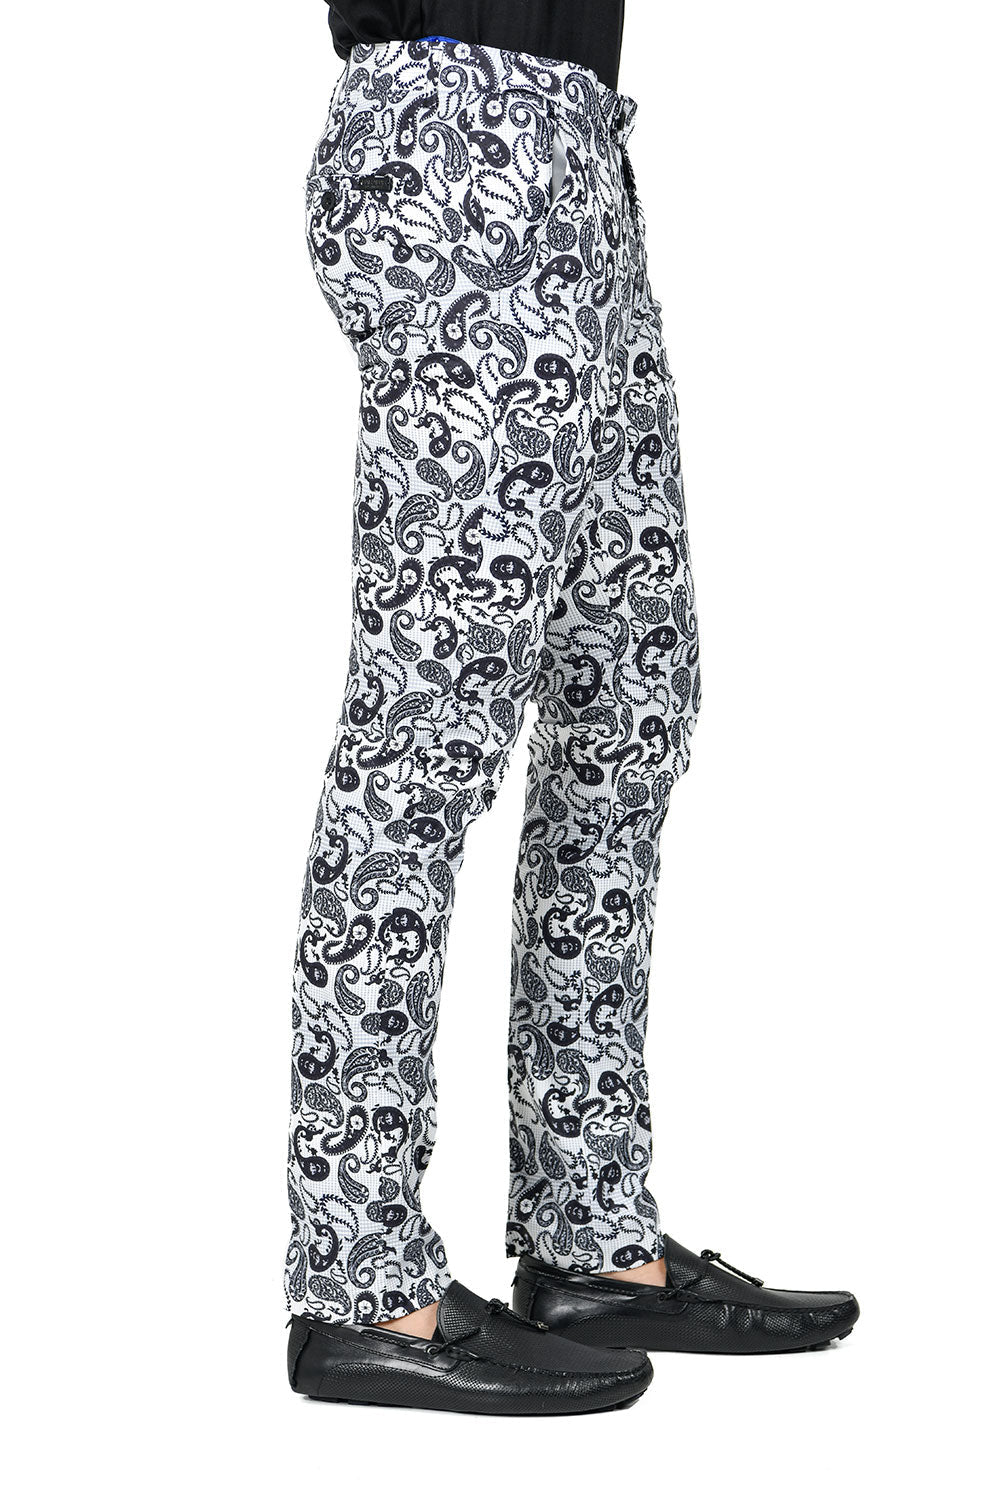 BARABAS Men's Paisley Design Classic Casual Chino Pants CP113 White Black